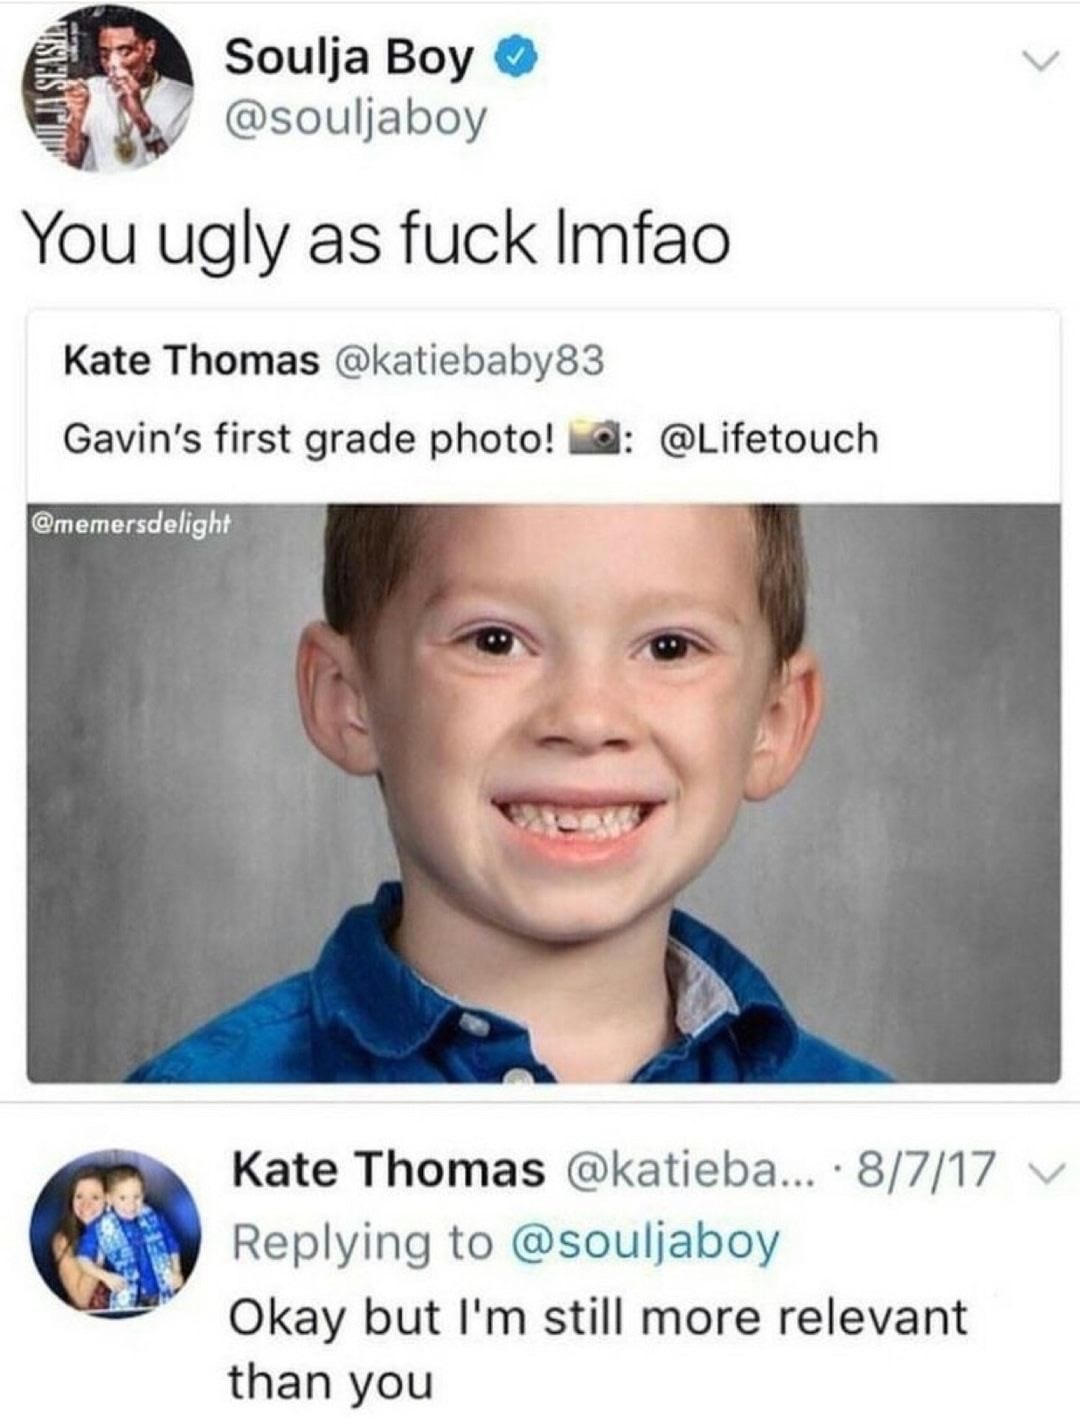 ugly little kid - Soulja Boy You ugly as fuck Imfao Kate Thomas Gavin's first grade photo! @ Kate Thomas ... . 8717 V Okay but I'm still more relevant than you